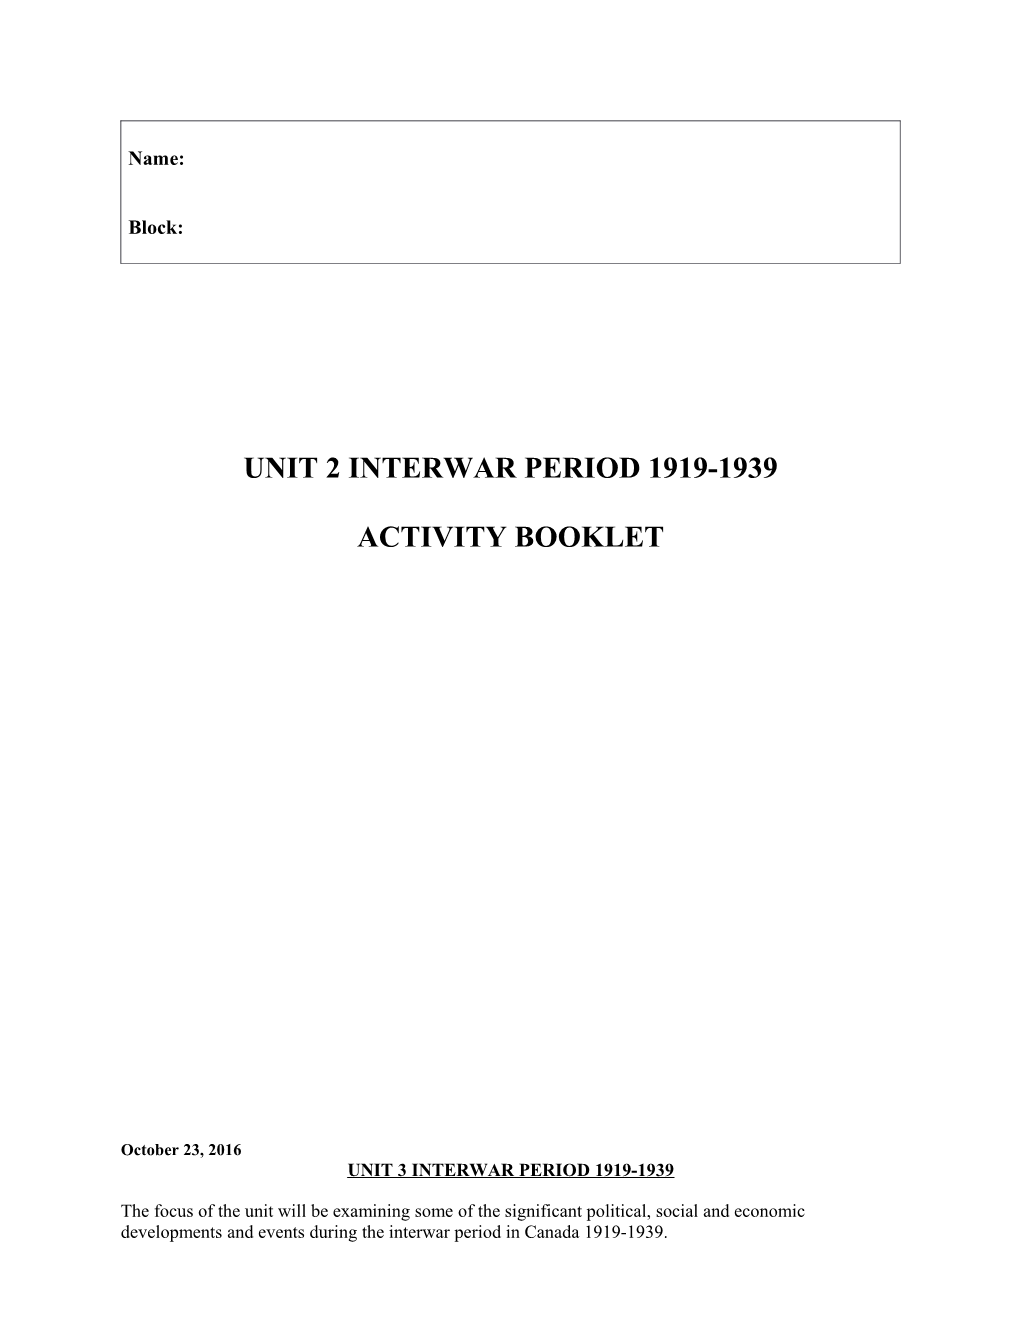 Unit 2 Interwar Period 1919-1939